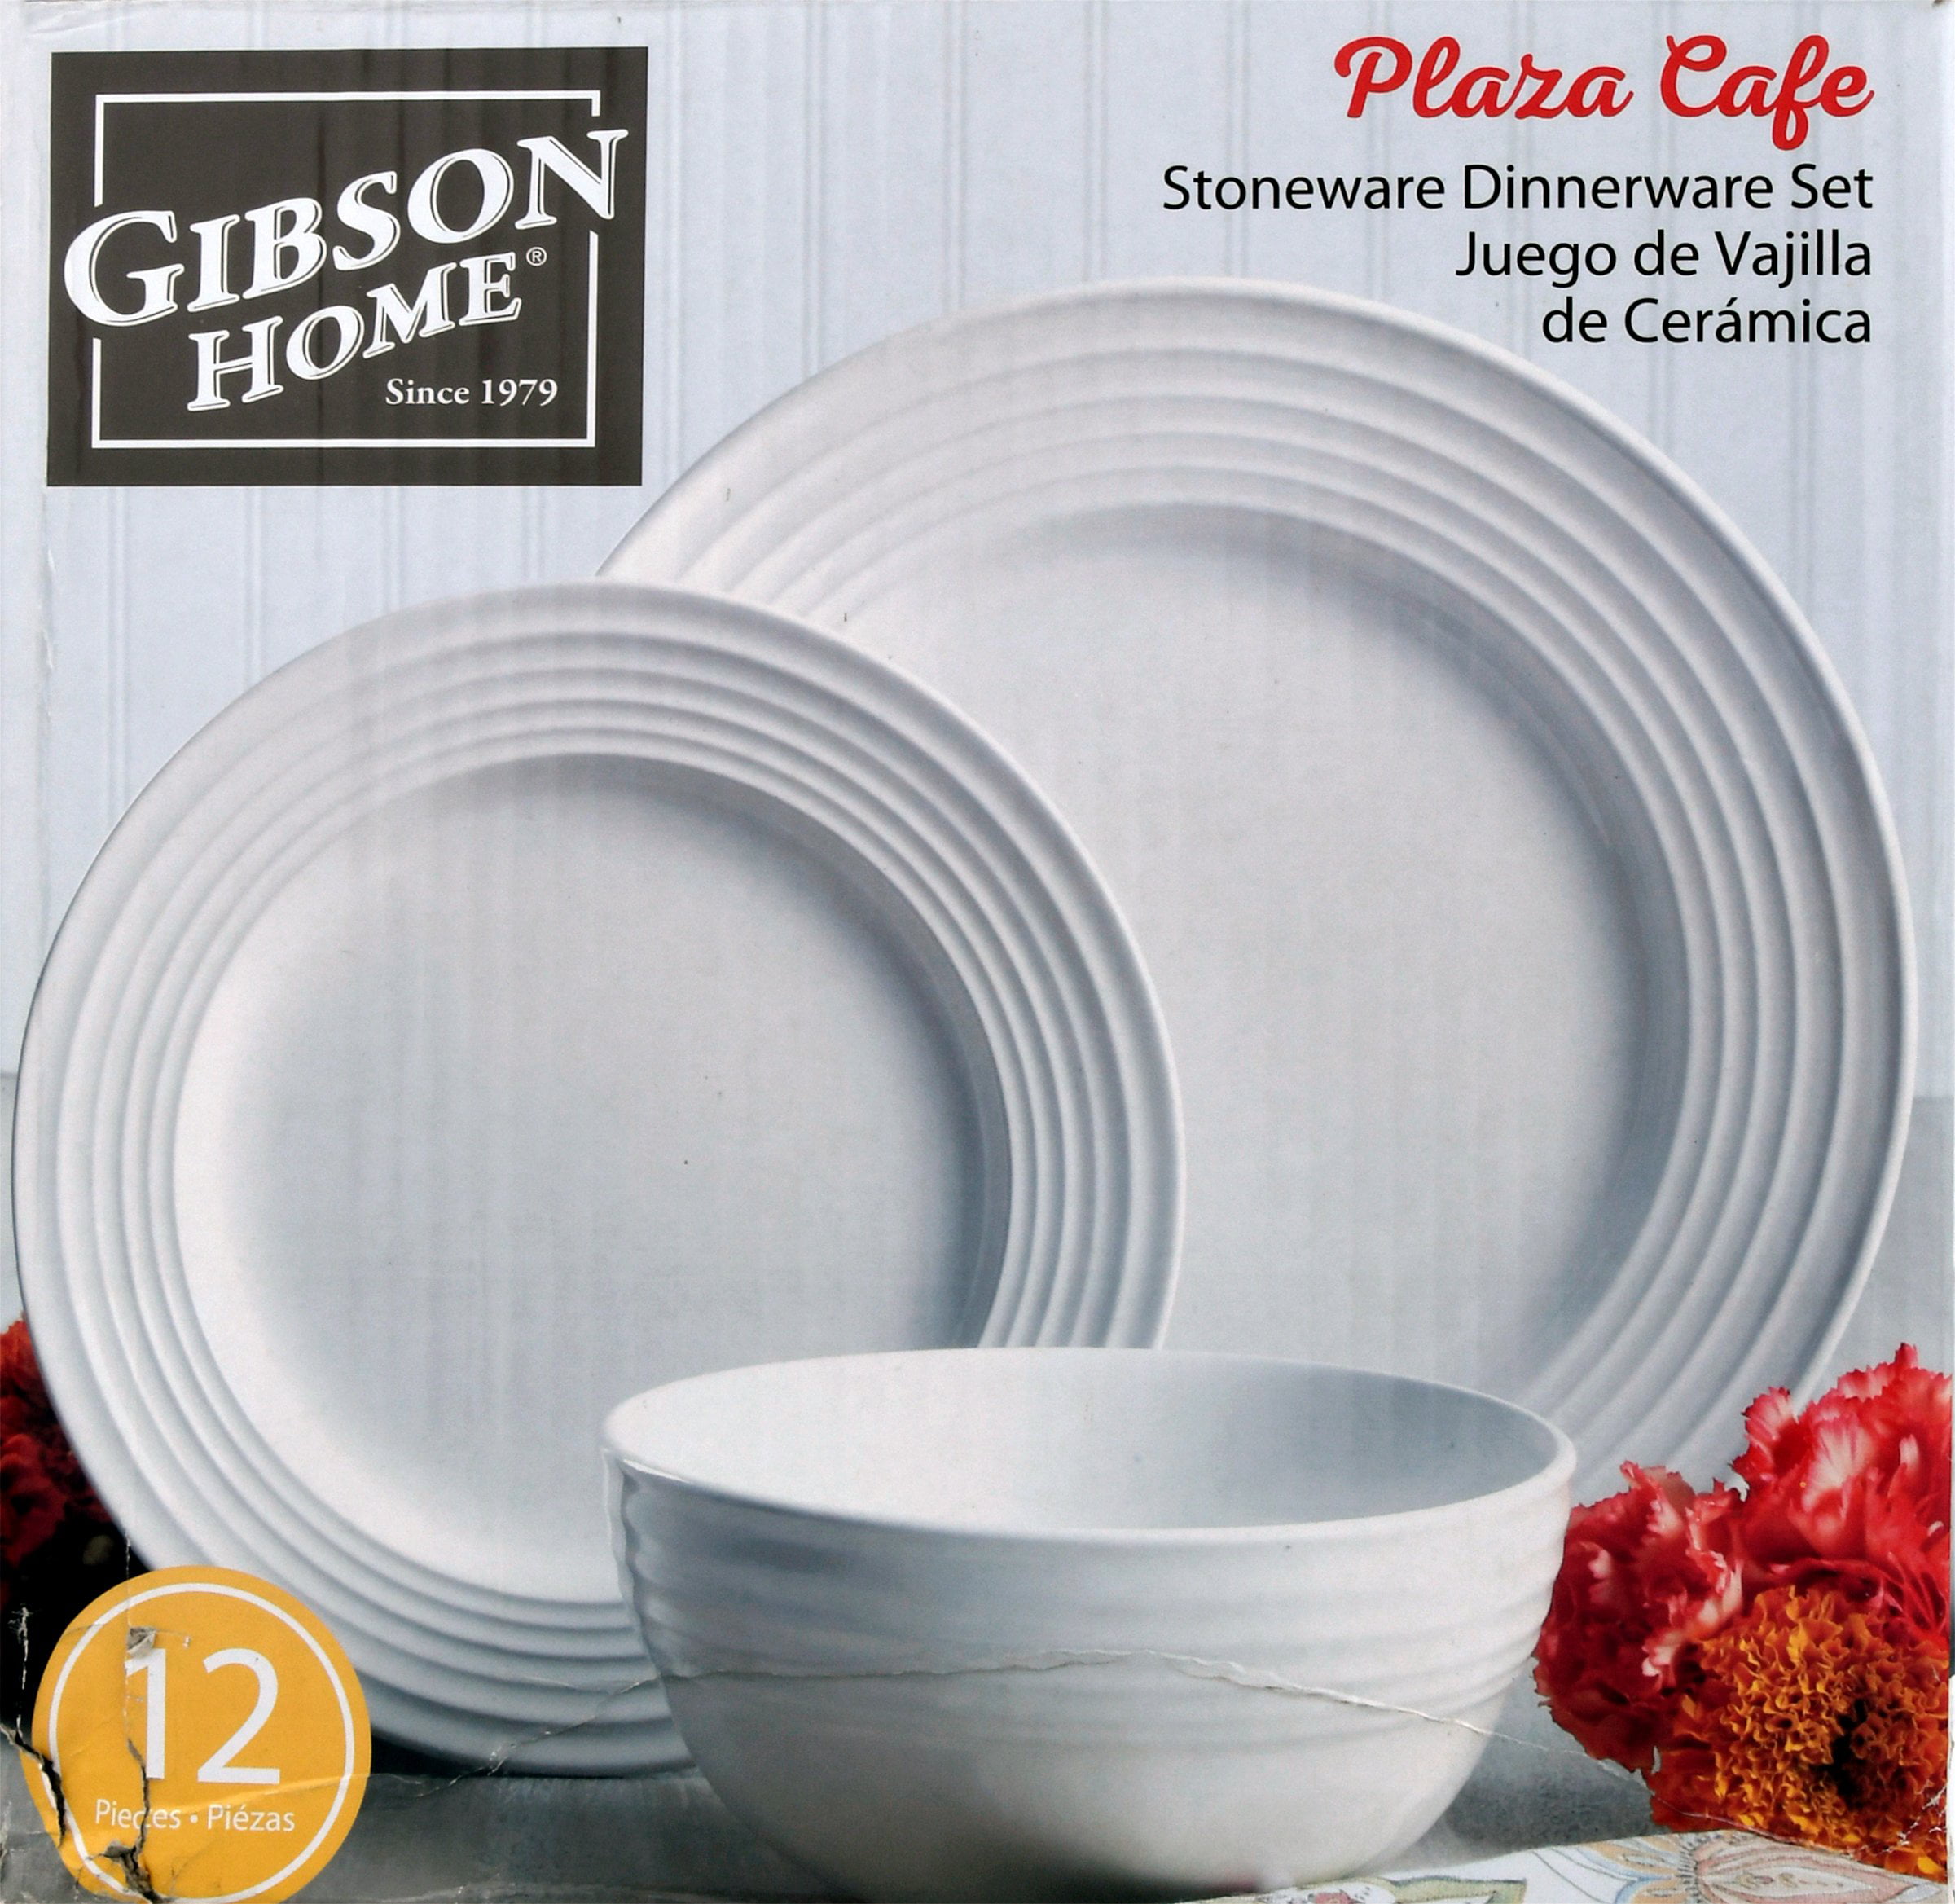 Gibson Home 123878.07 7 Piece Plaza Cafe Aluminum Nonstick Cookware Set, Lavender